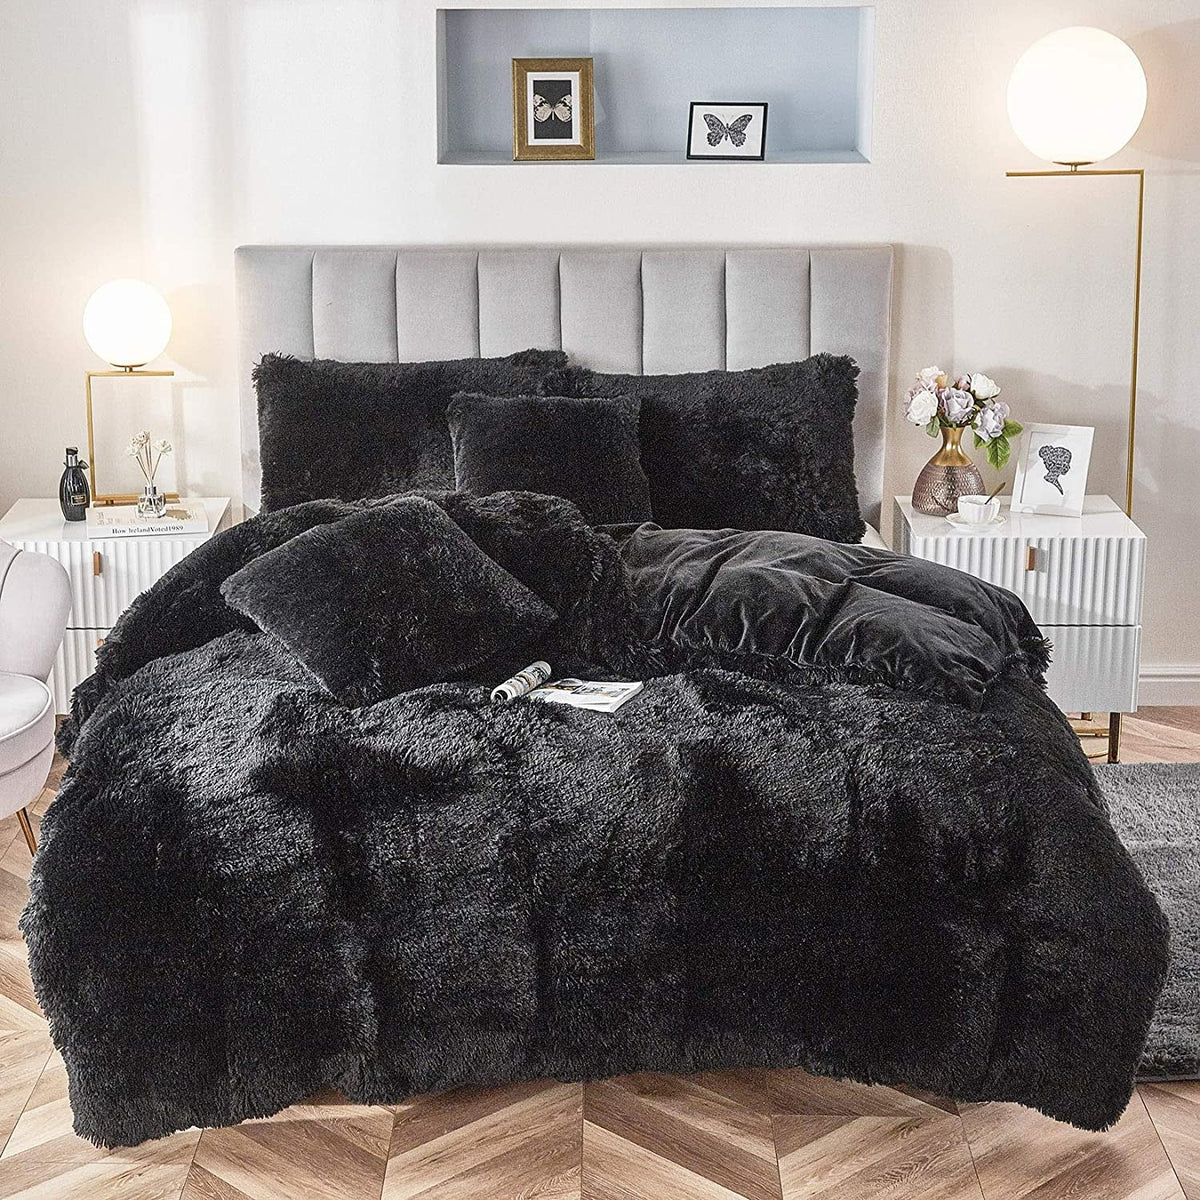 Fluffy Comforter Cover Bed Set-ChandeliersDecor